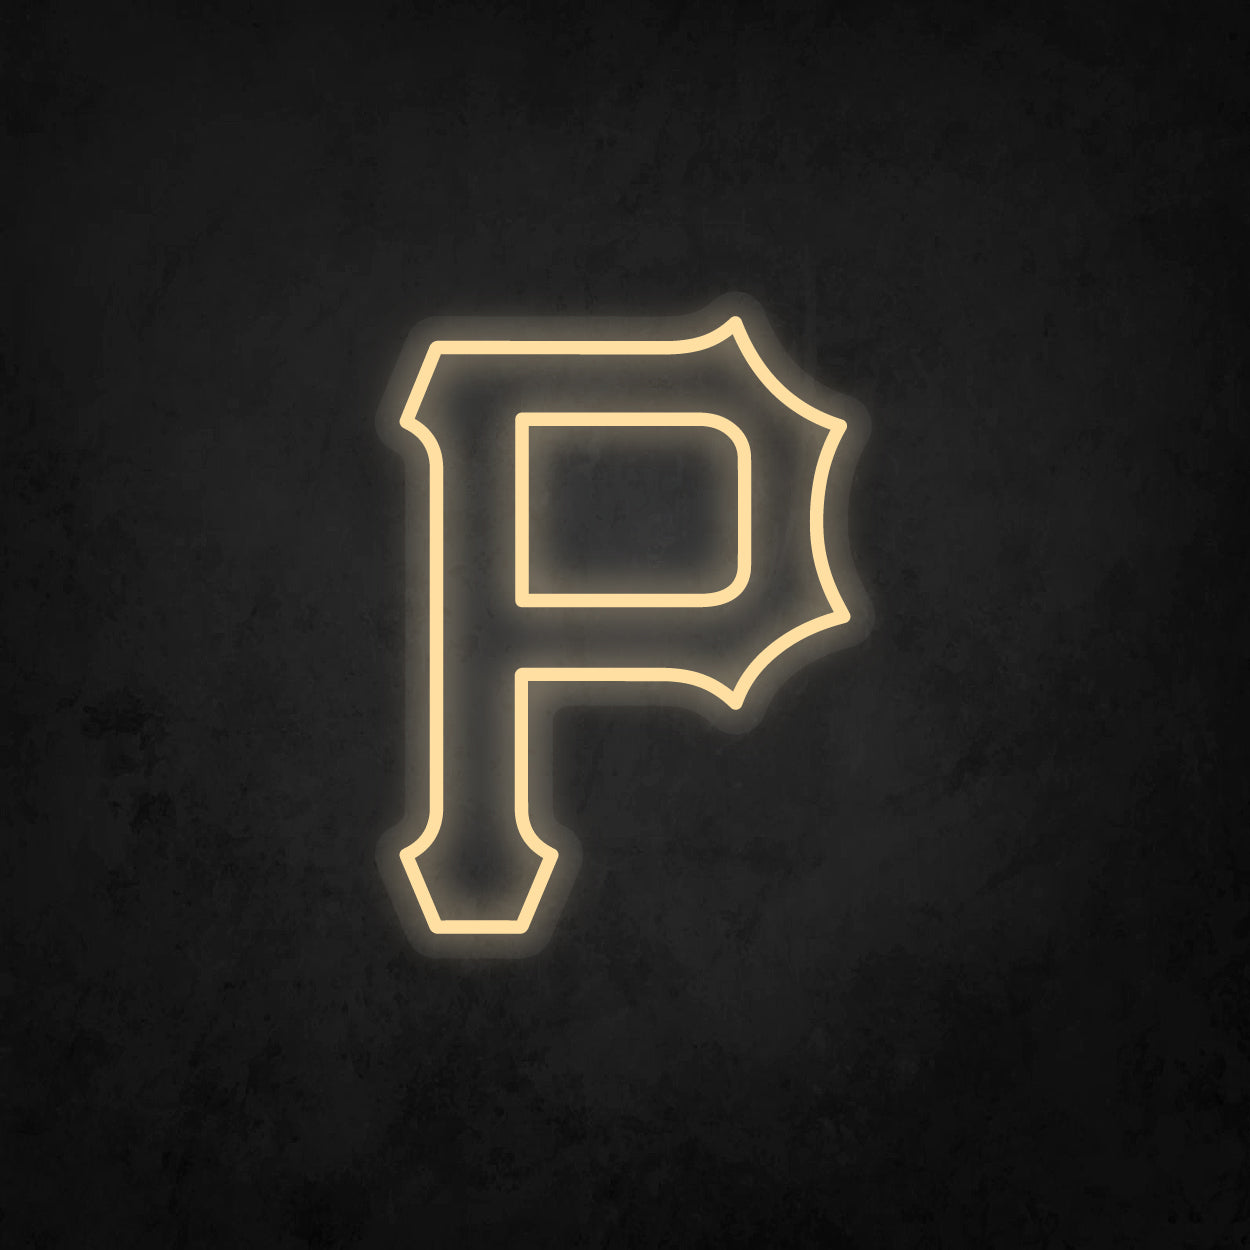 LED Neon Sign - Pittsburgh Pirates - Medium